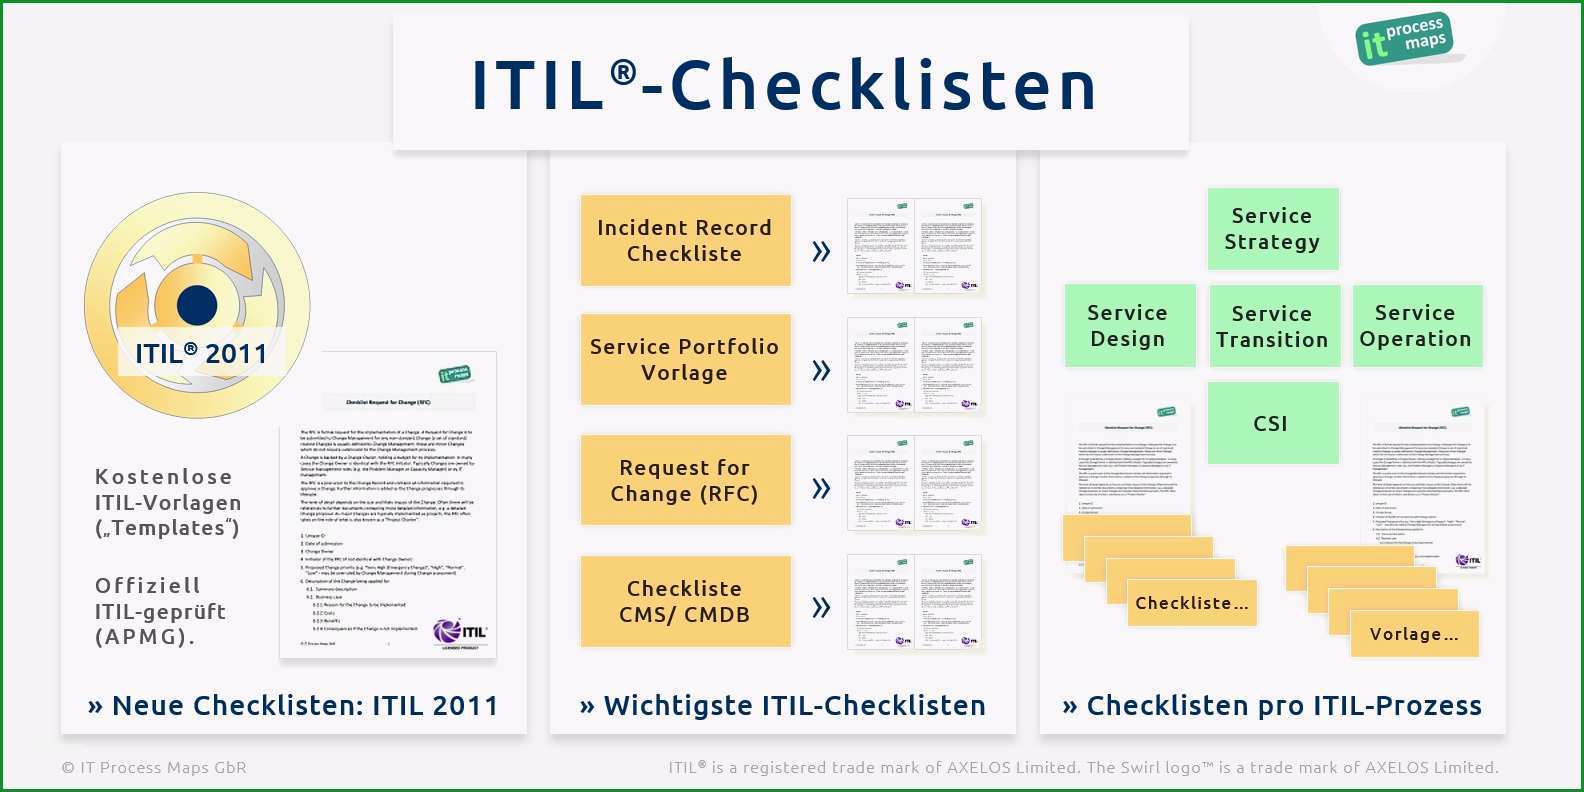 ITIL Checklisten